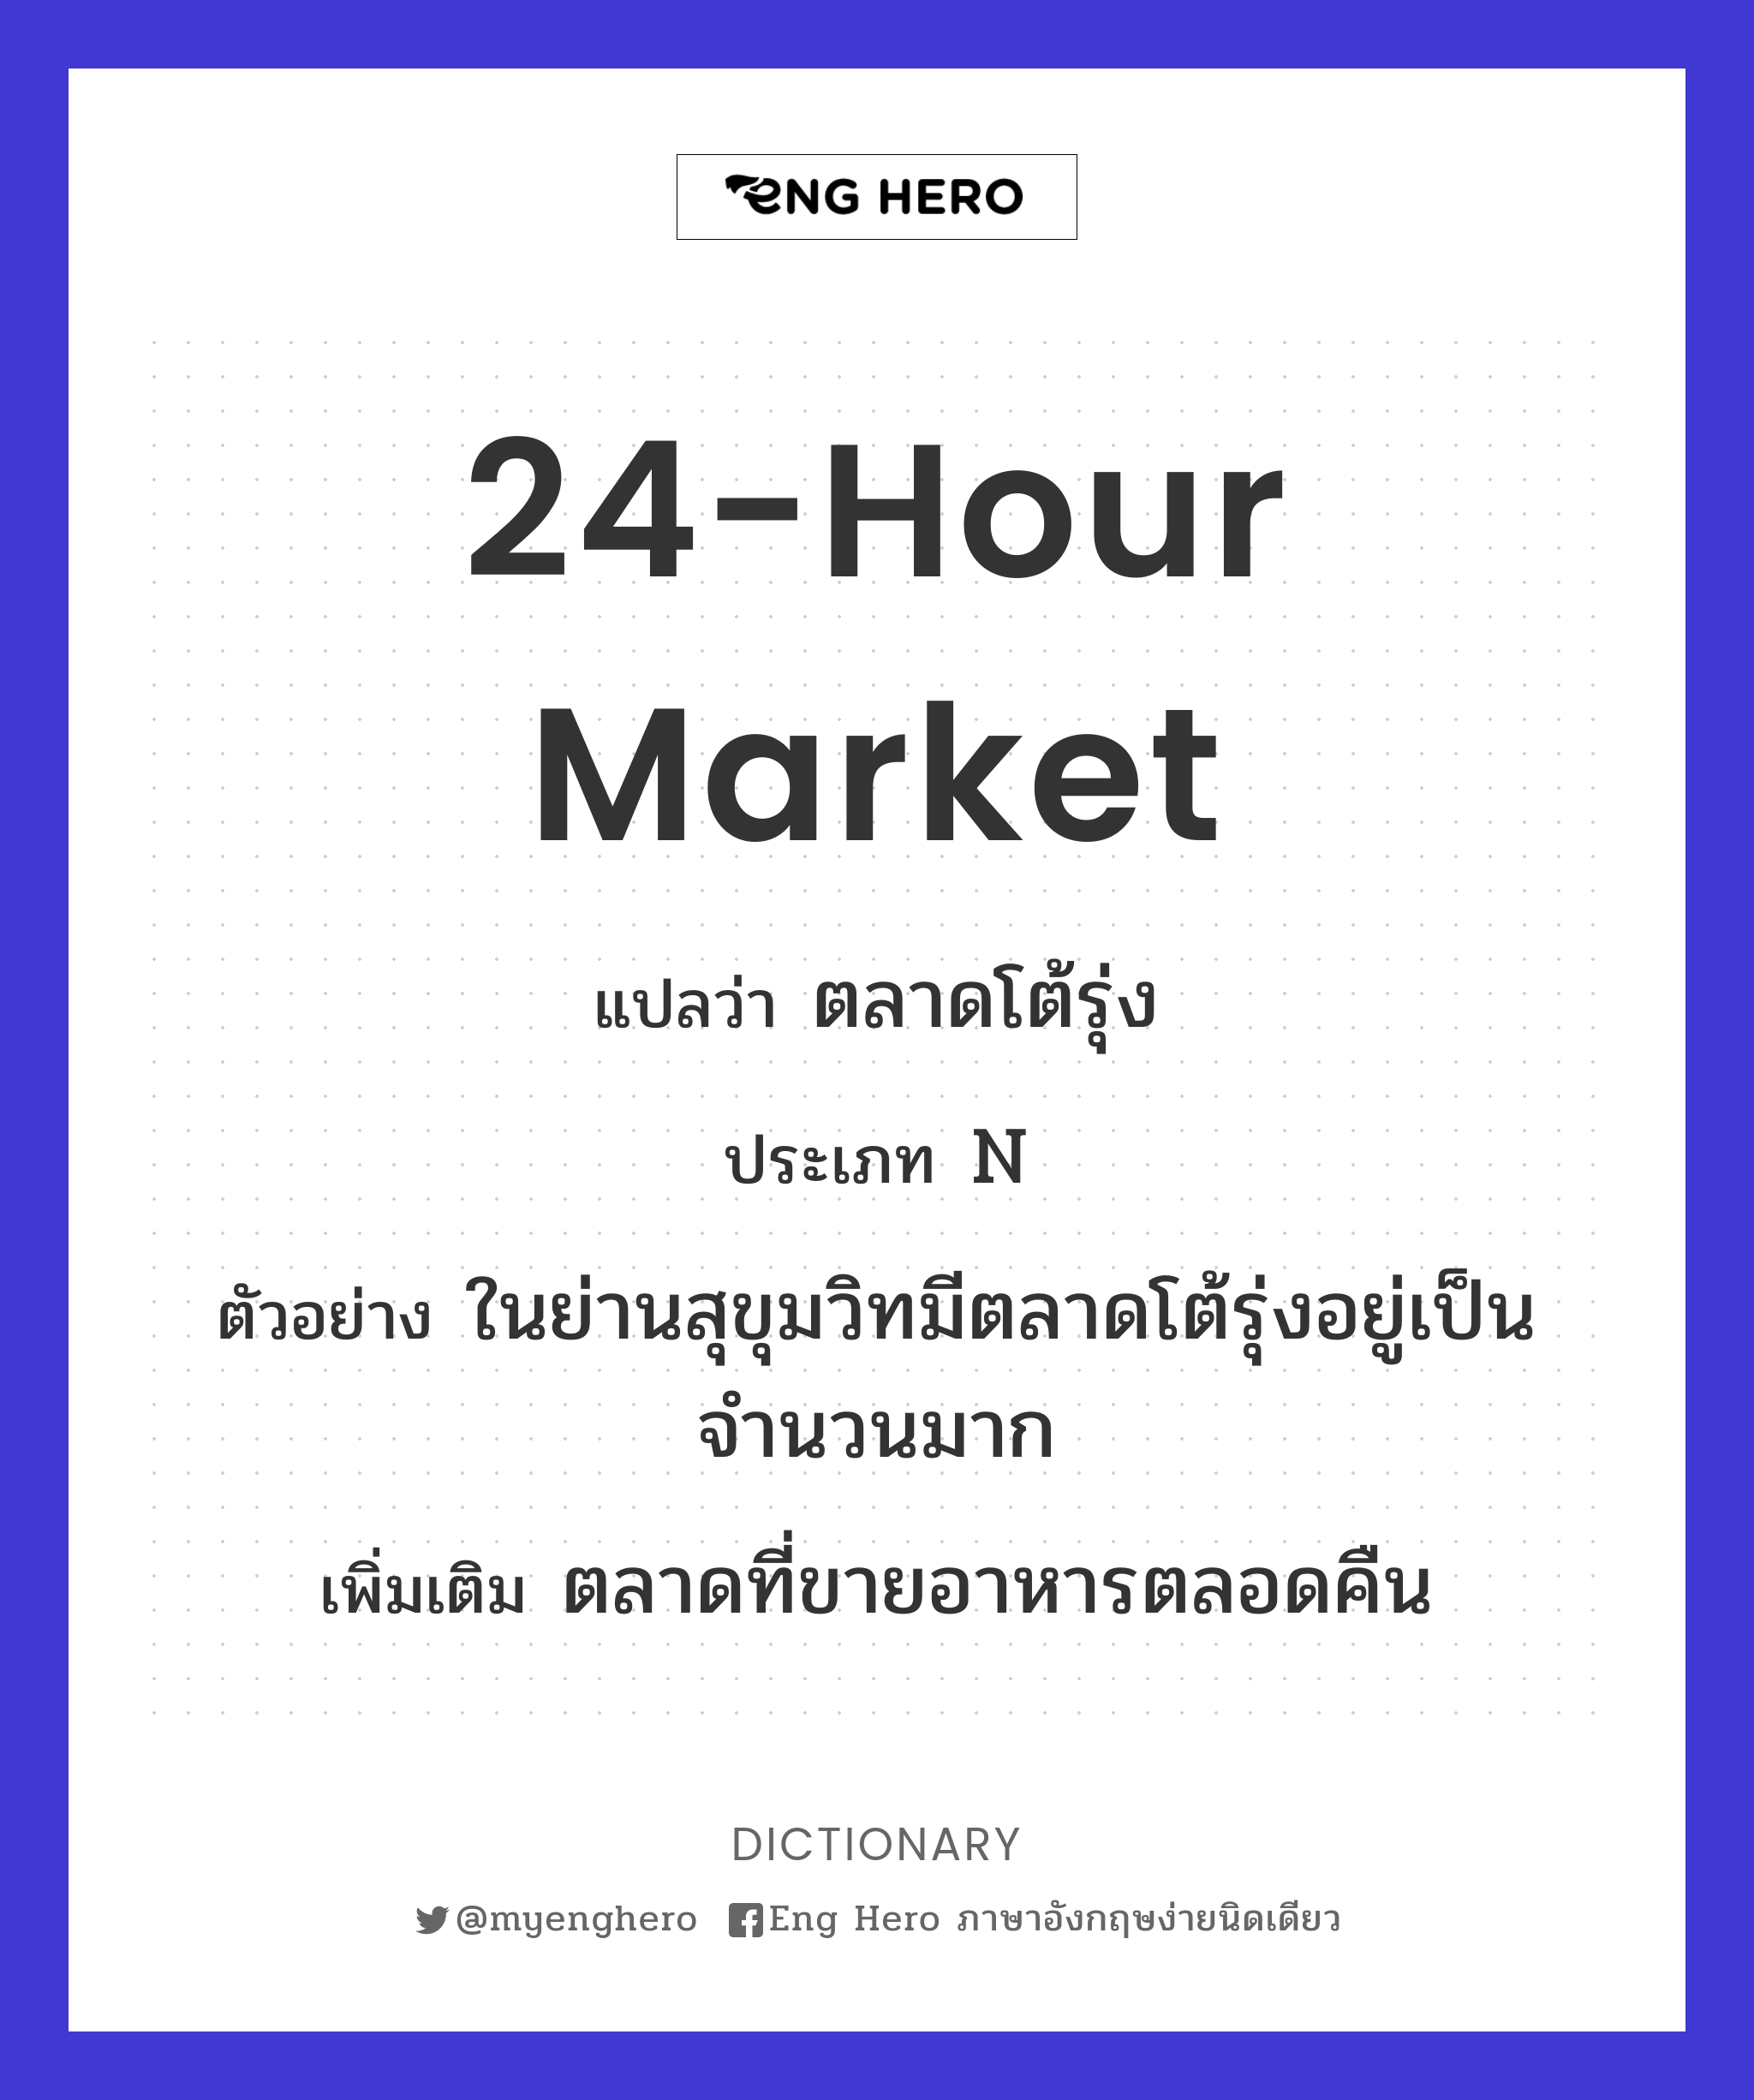 24-hour market